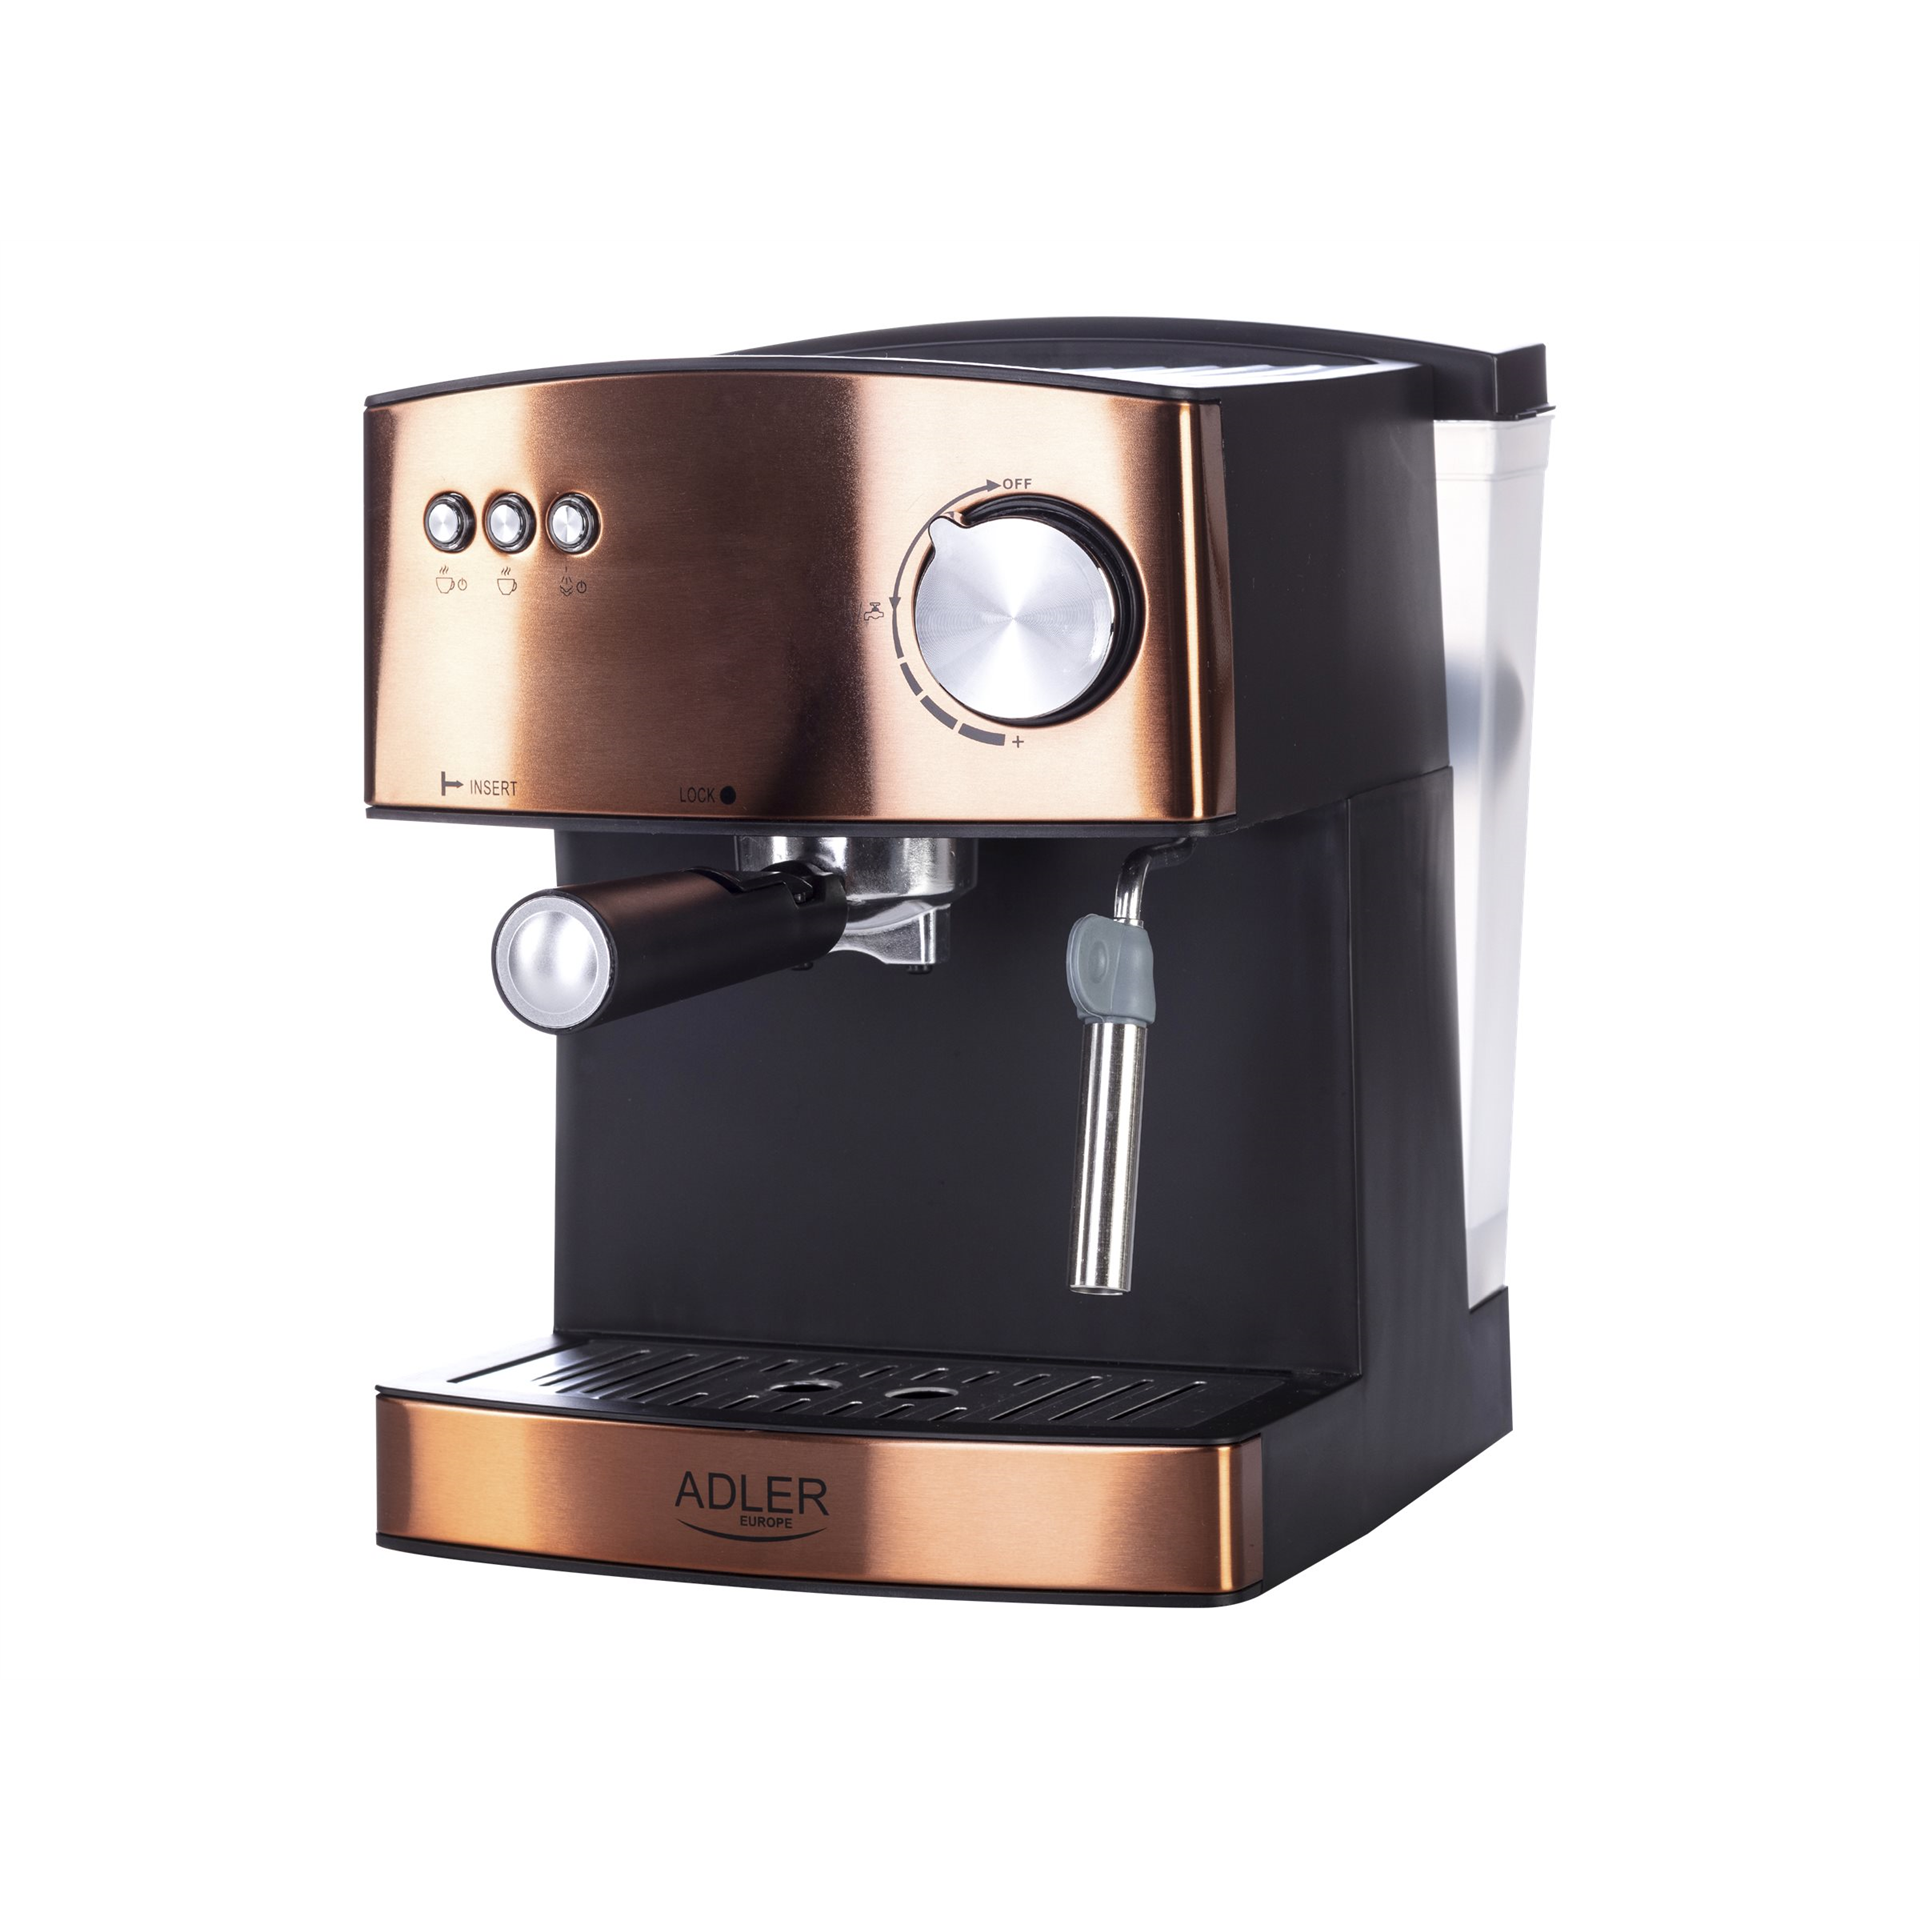 Adler Espresso coffee machine  AD 4404cr Pump pressure 15 bar Built-in milk frother Semi-automatic 850 W Cooper/ black